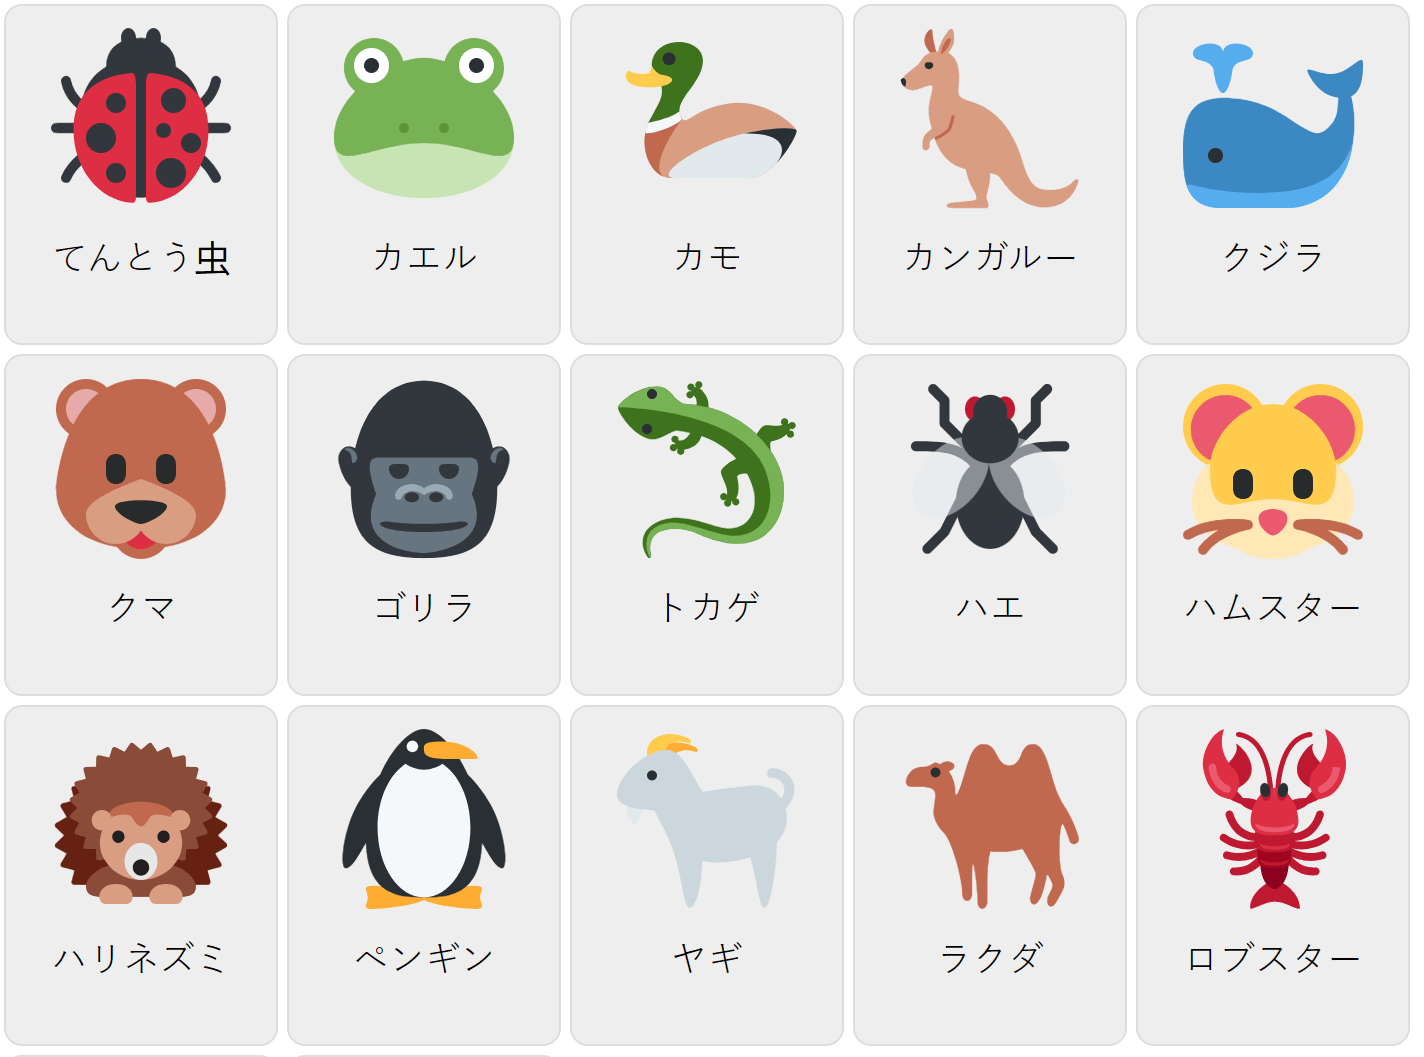 Animals in Japanese 2